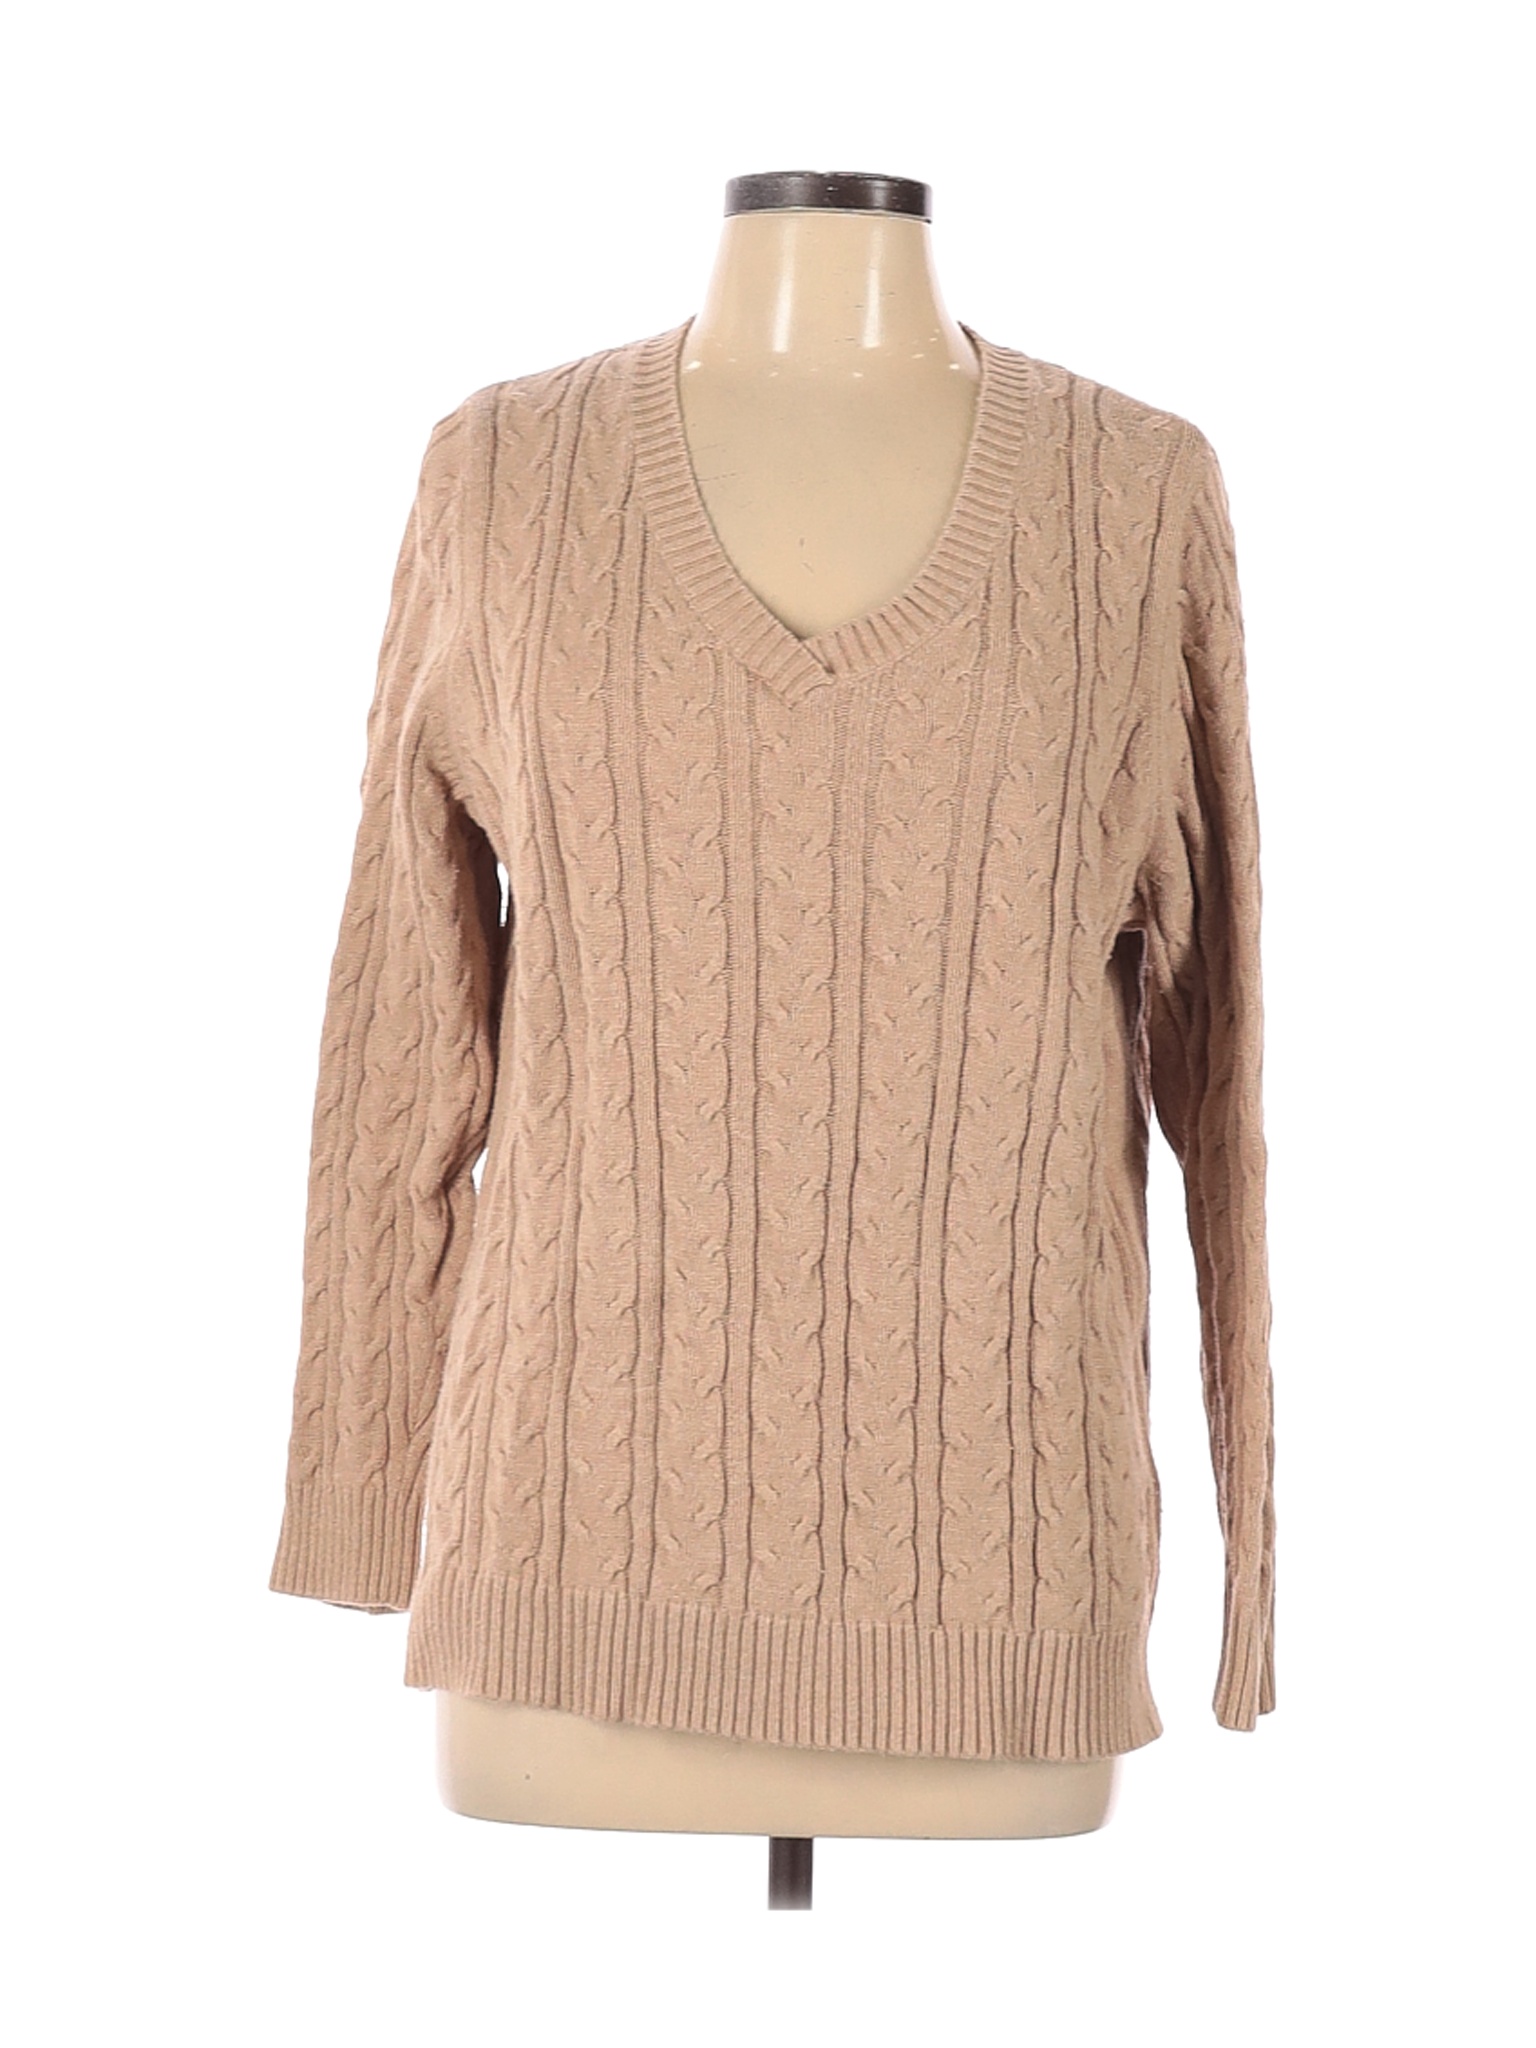 Croft & Barrow Women Brown Pullover Sweater 1X Plus | eBay